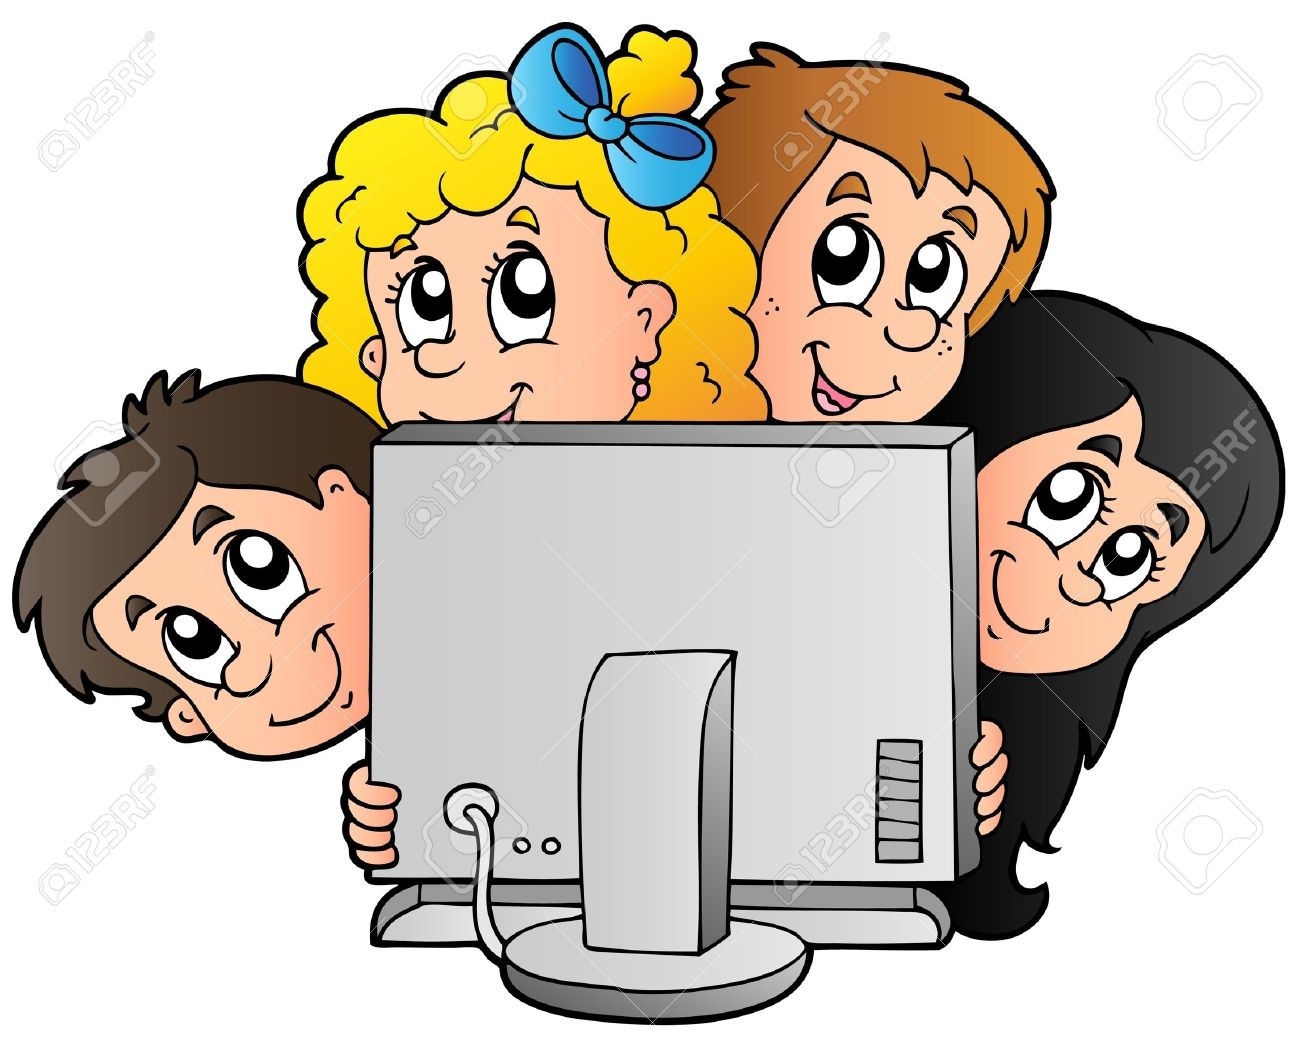 Cartoon Kids With Computer.